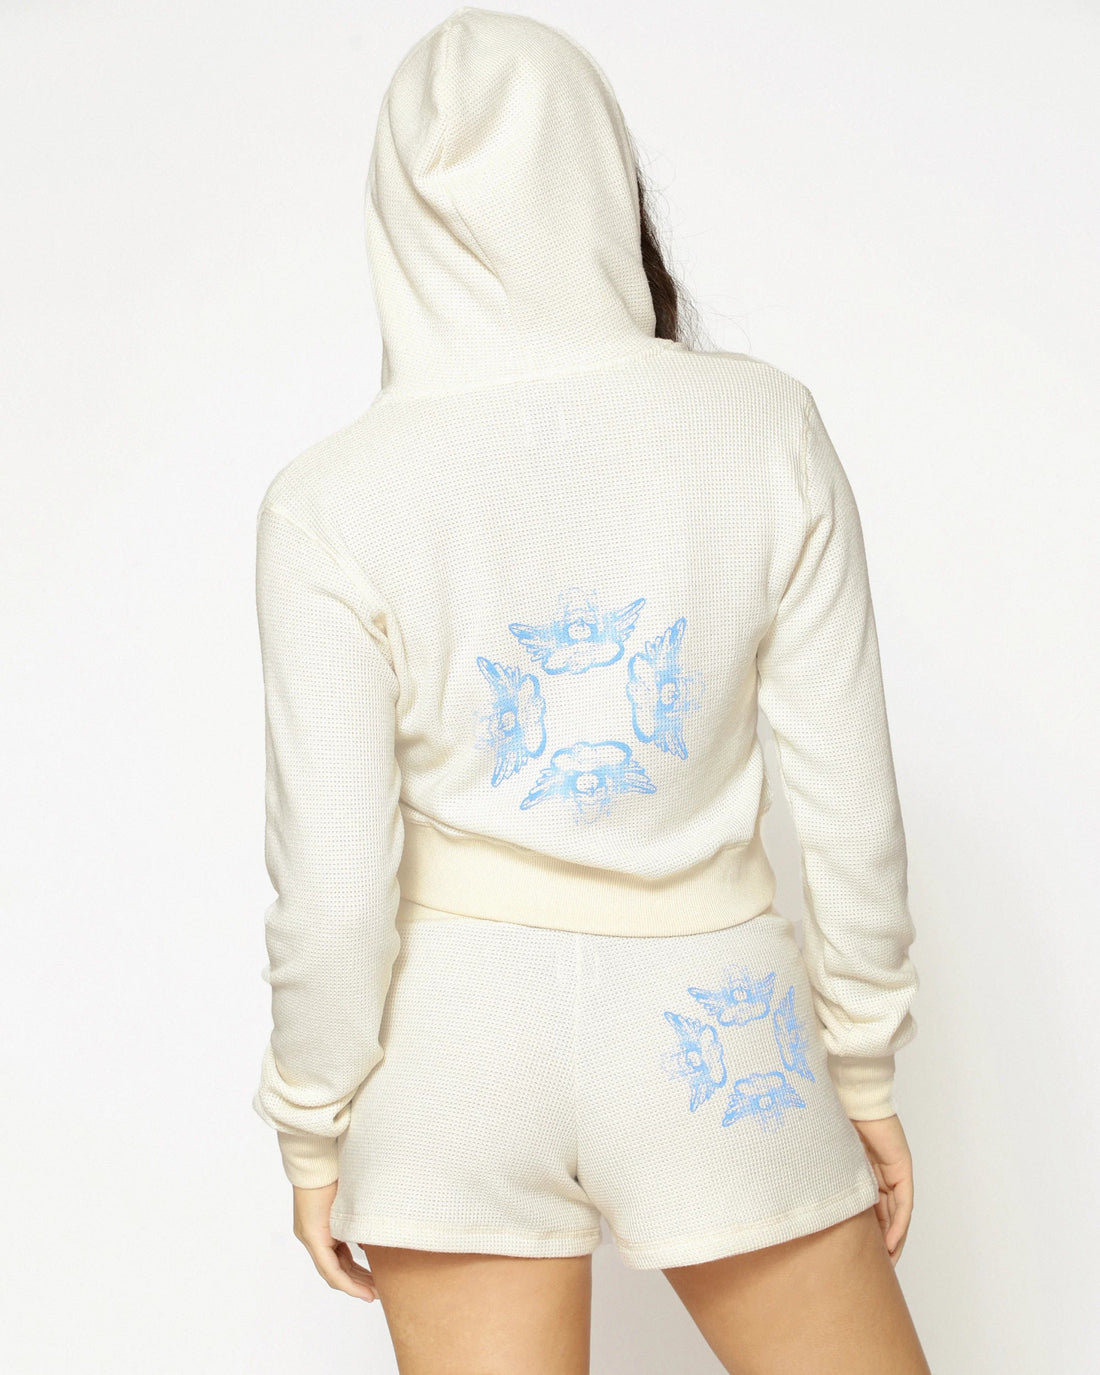 Shop Boys Lie Spread Your Wings Thermal Zip Up Hoodie - Premium Hooded Sweatshirt from Boys Lie Online now at Spoiled Brat 